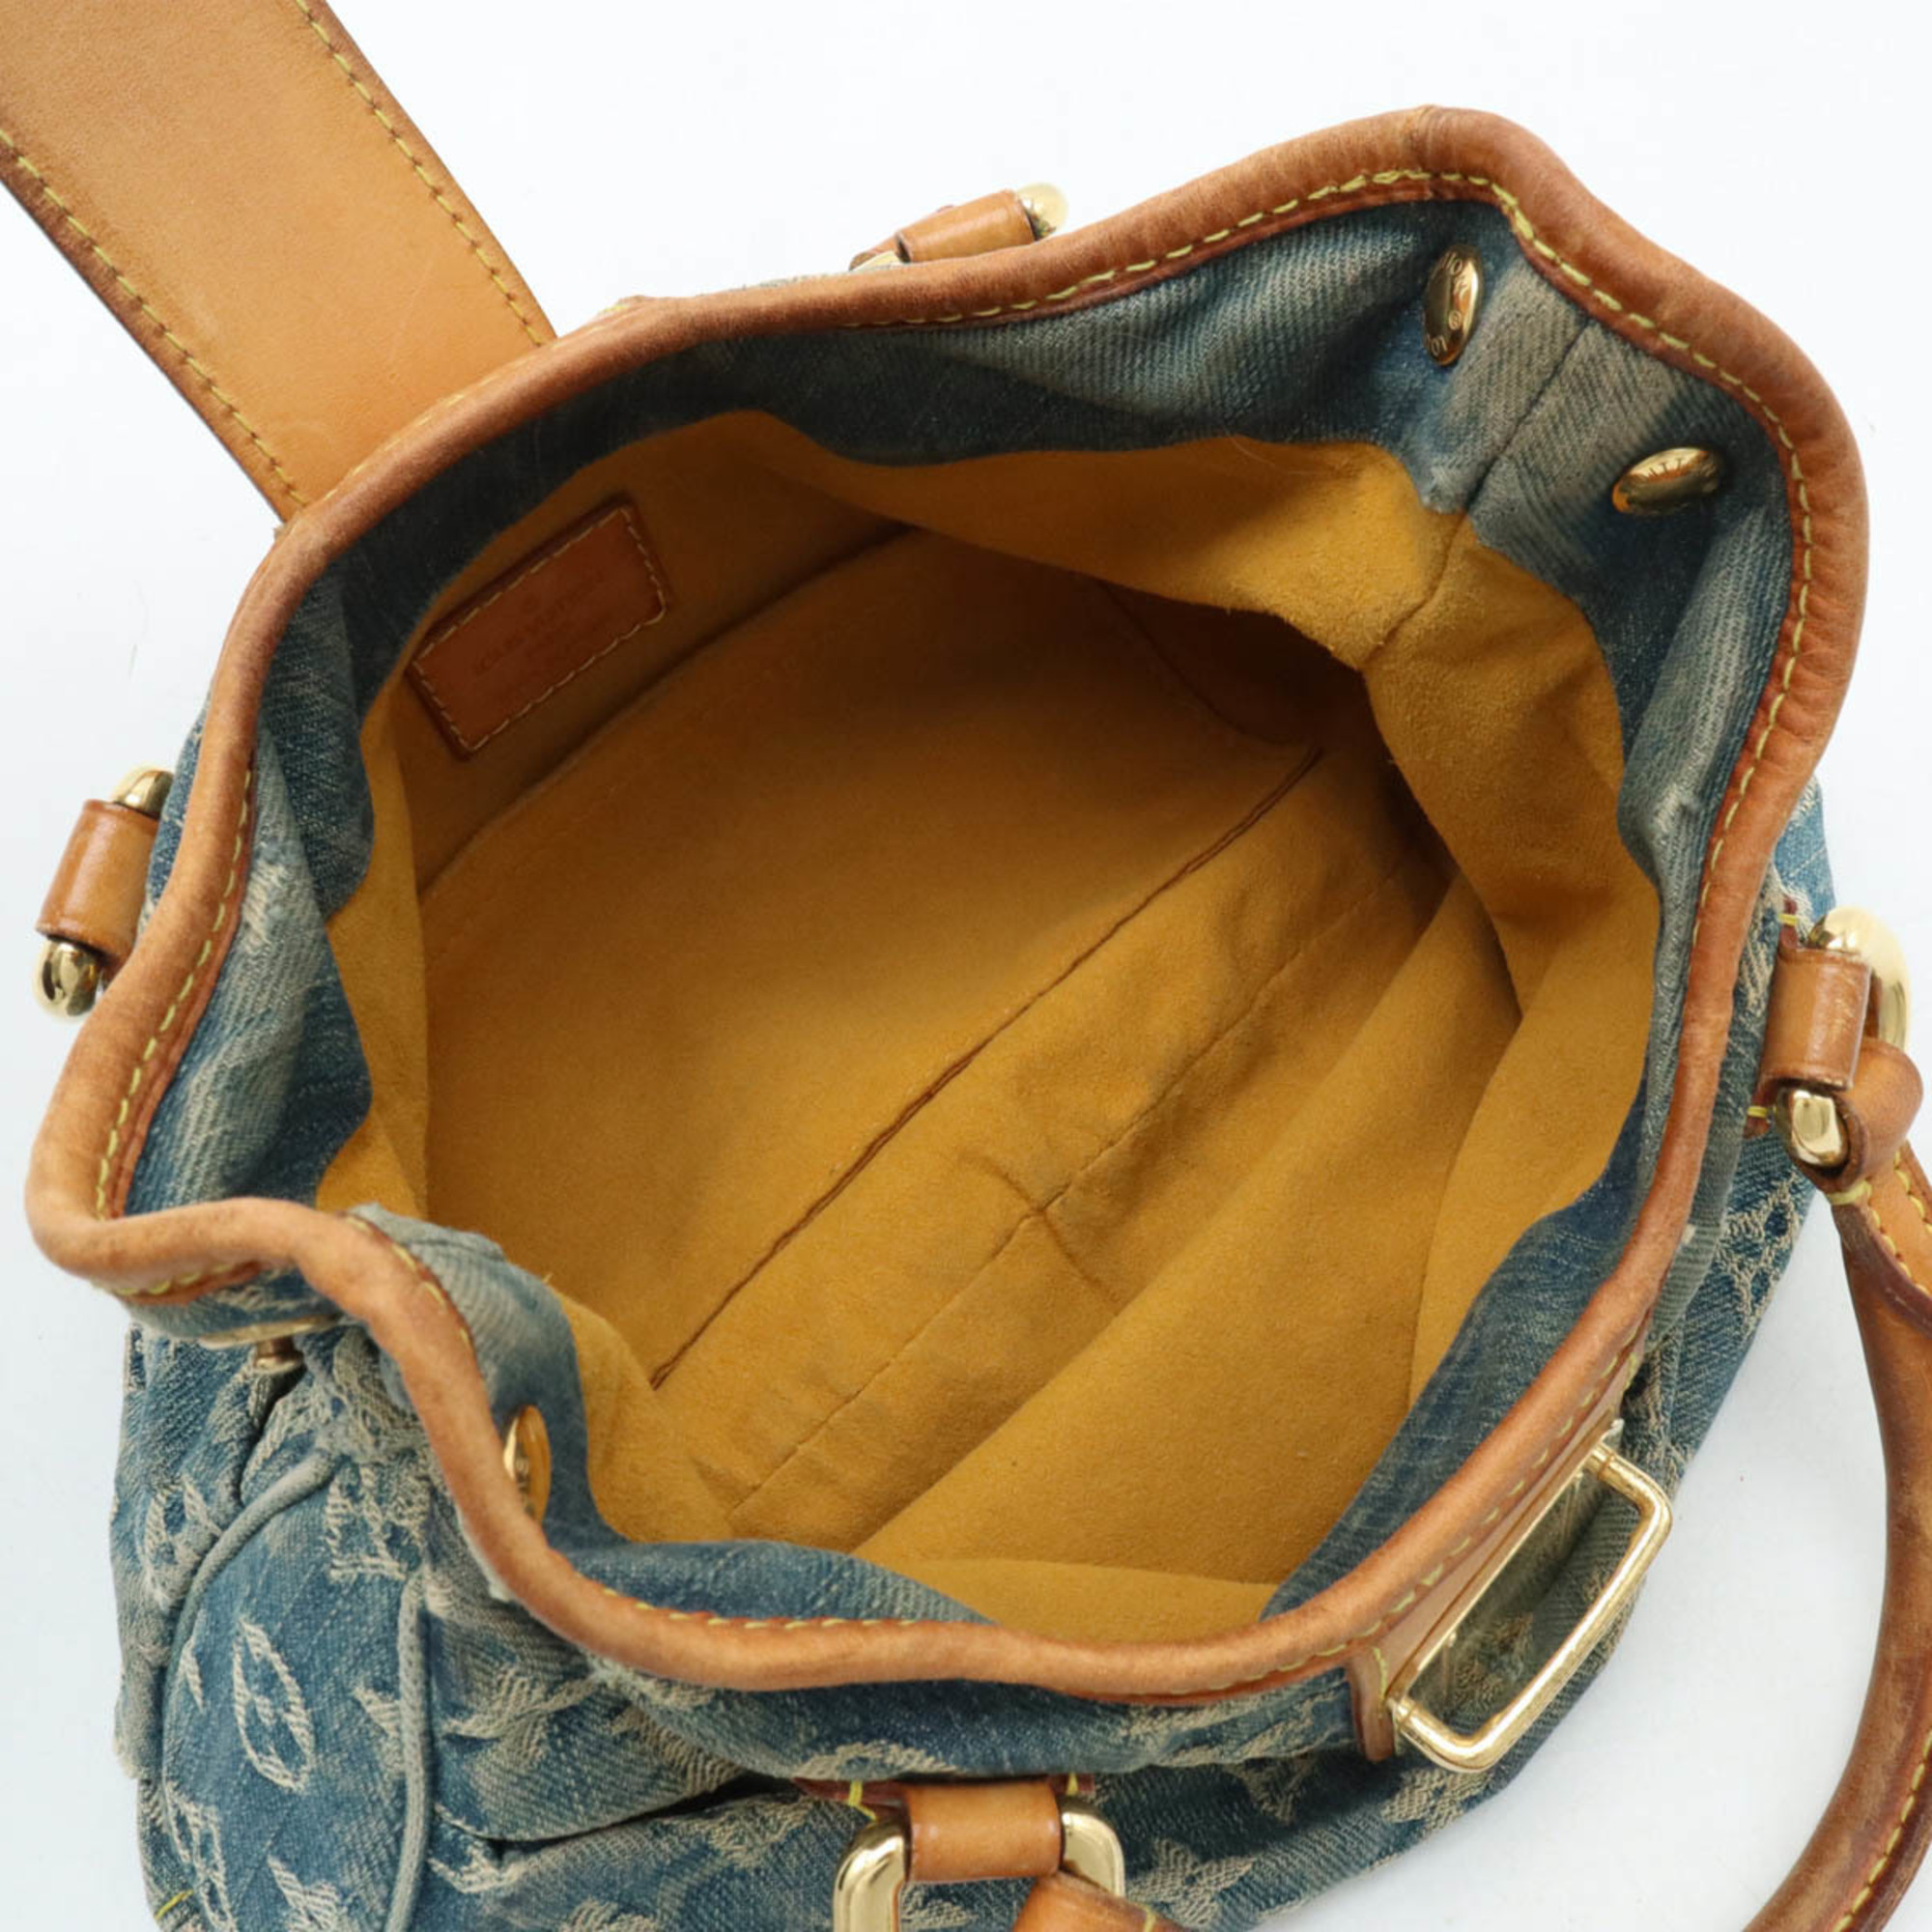 LOUIS VUITTON Monogram Denim Pretty Handbag Bag Blue M95020